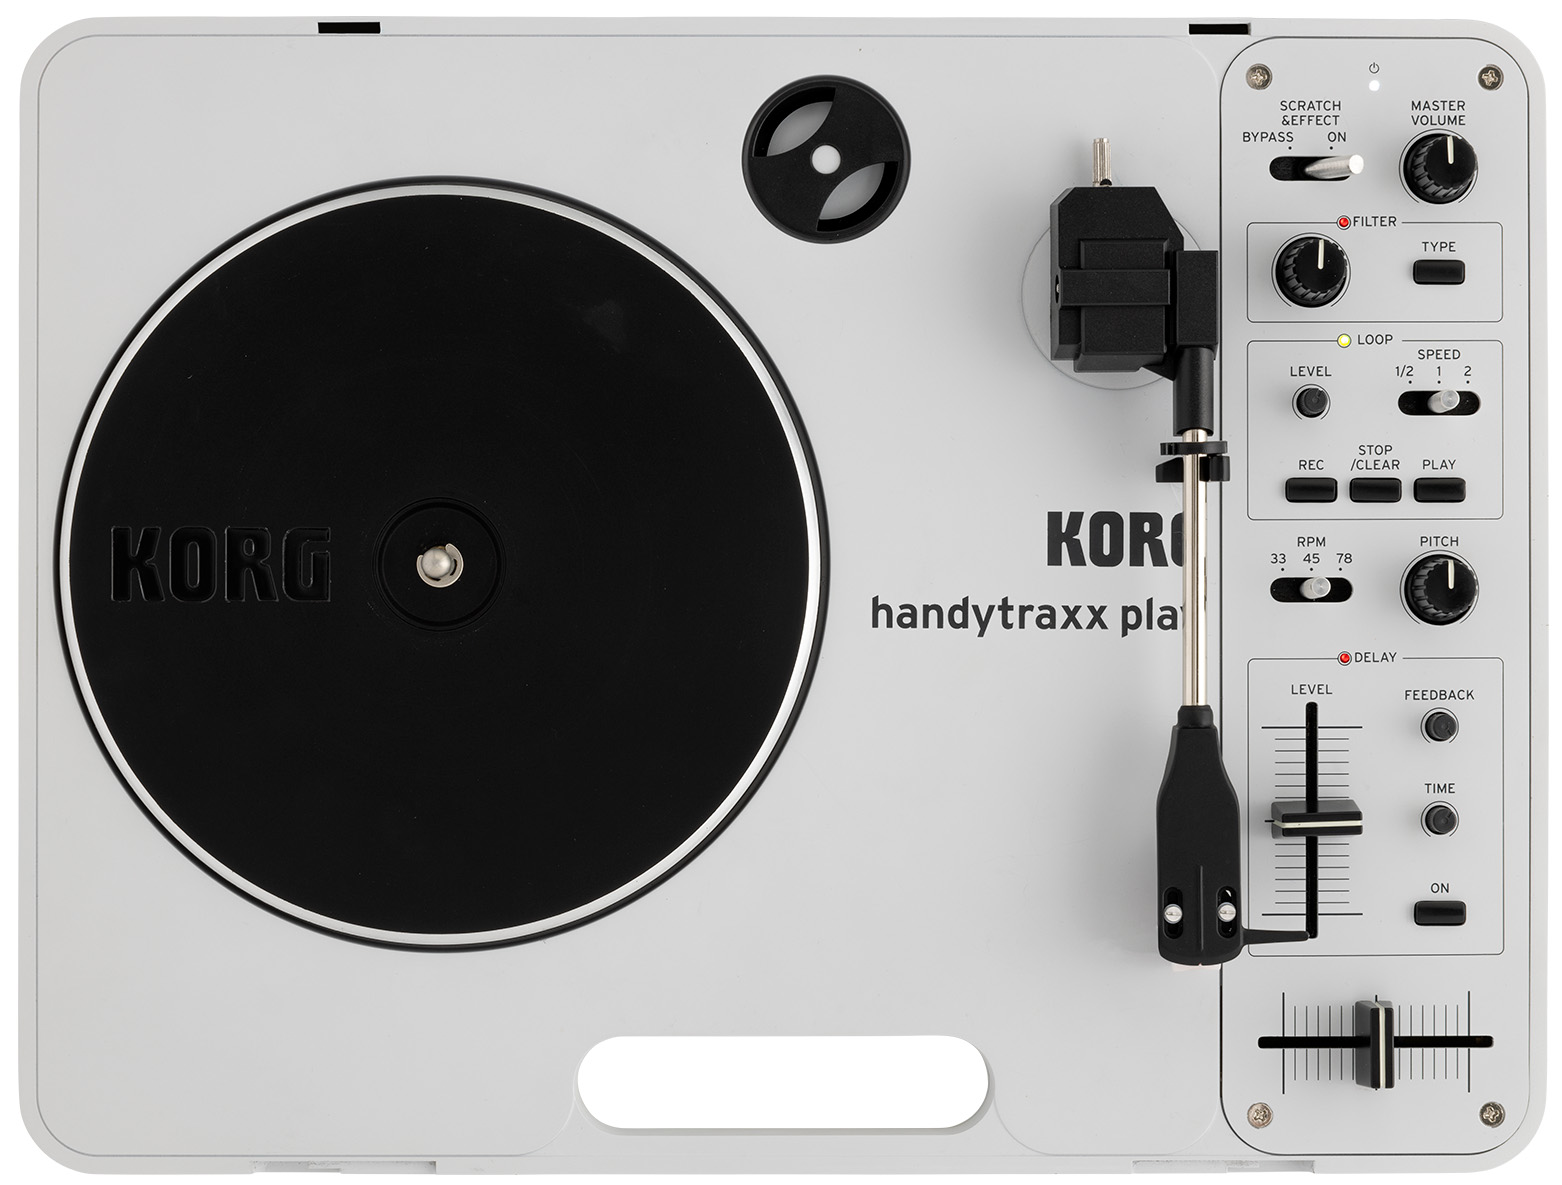 Vista cenital del prototipo de plato DJ Korg handytraxx play